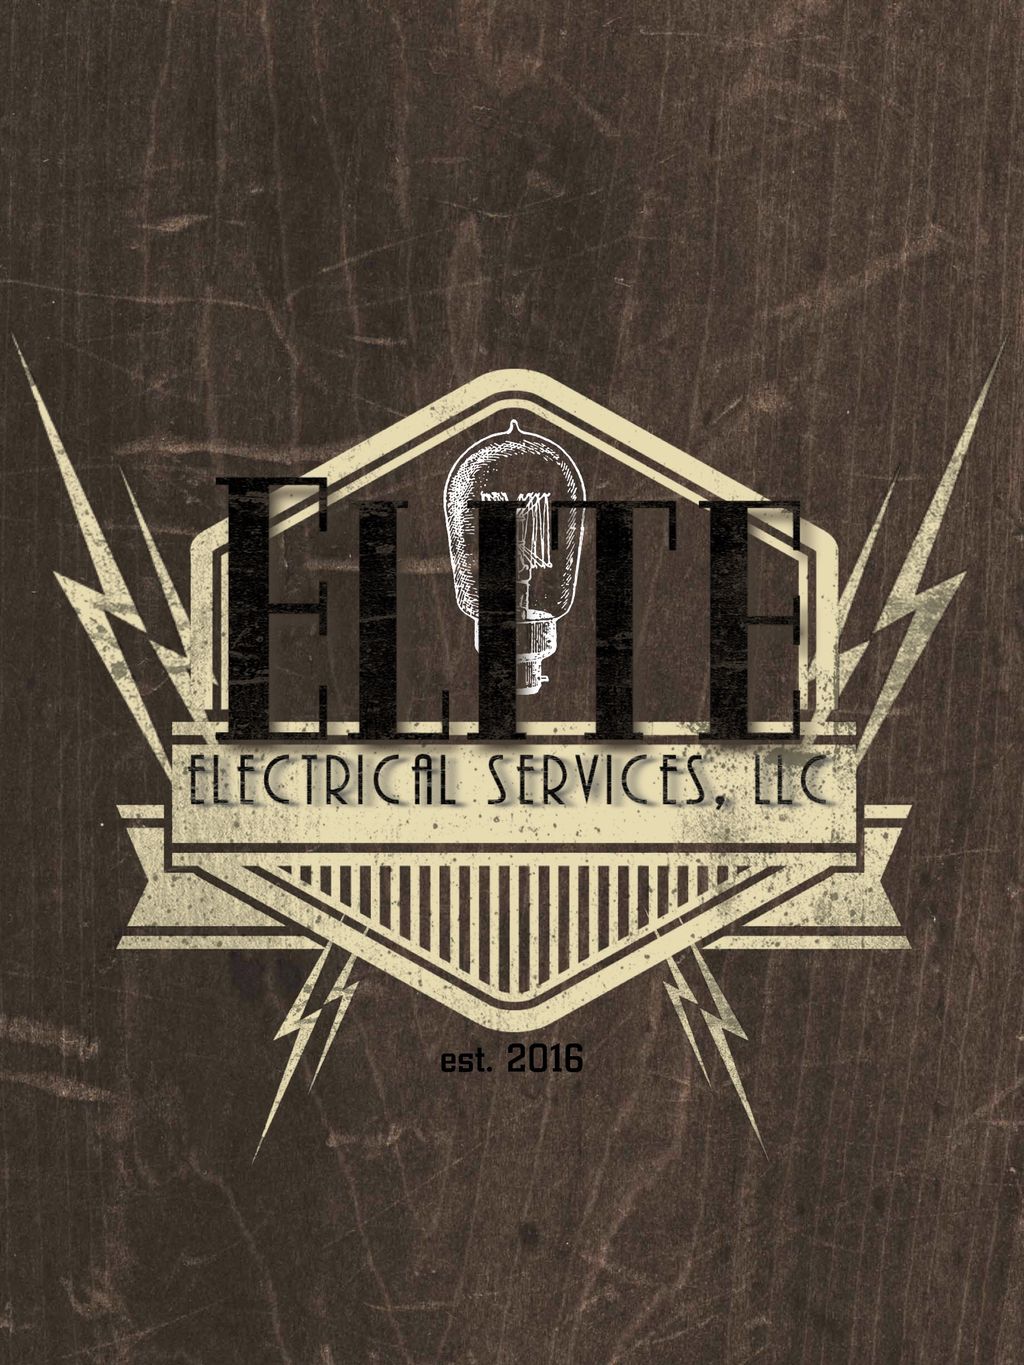 Elite Electrical Services, LLC